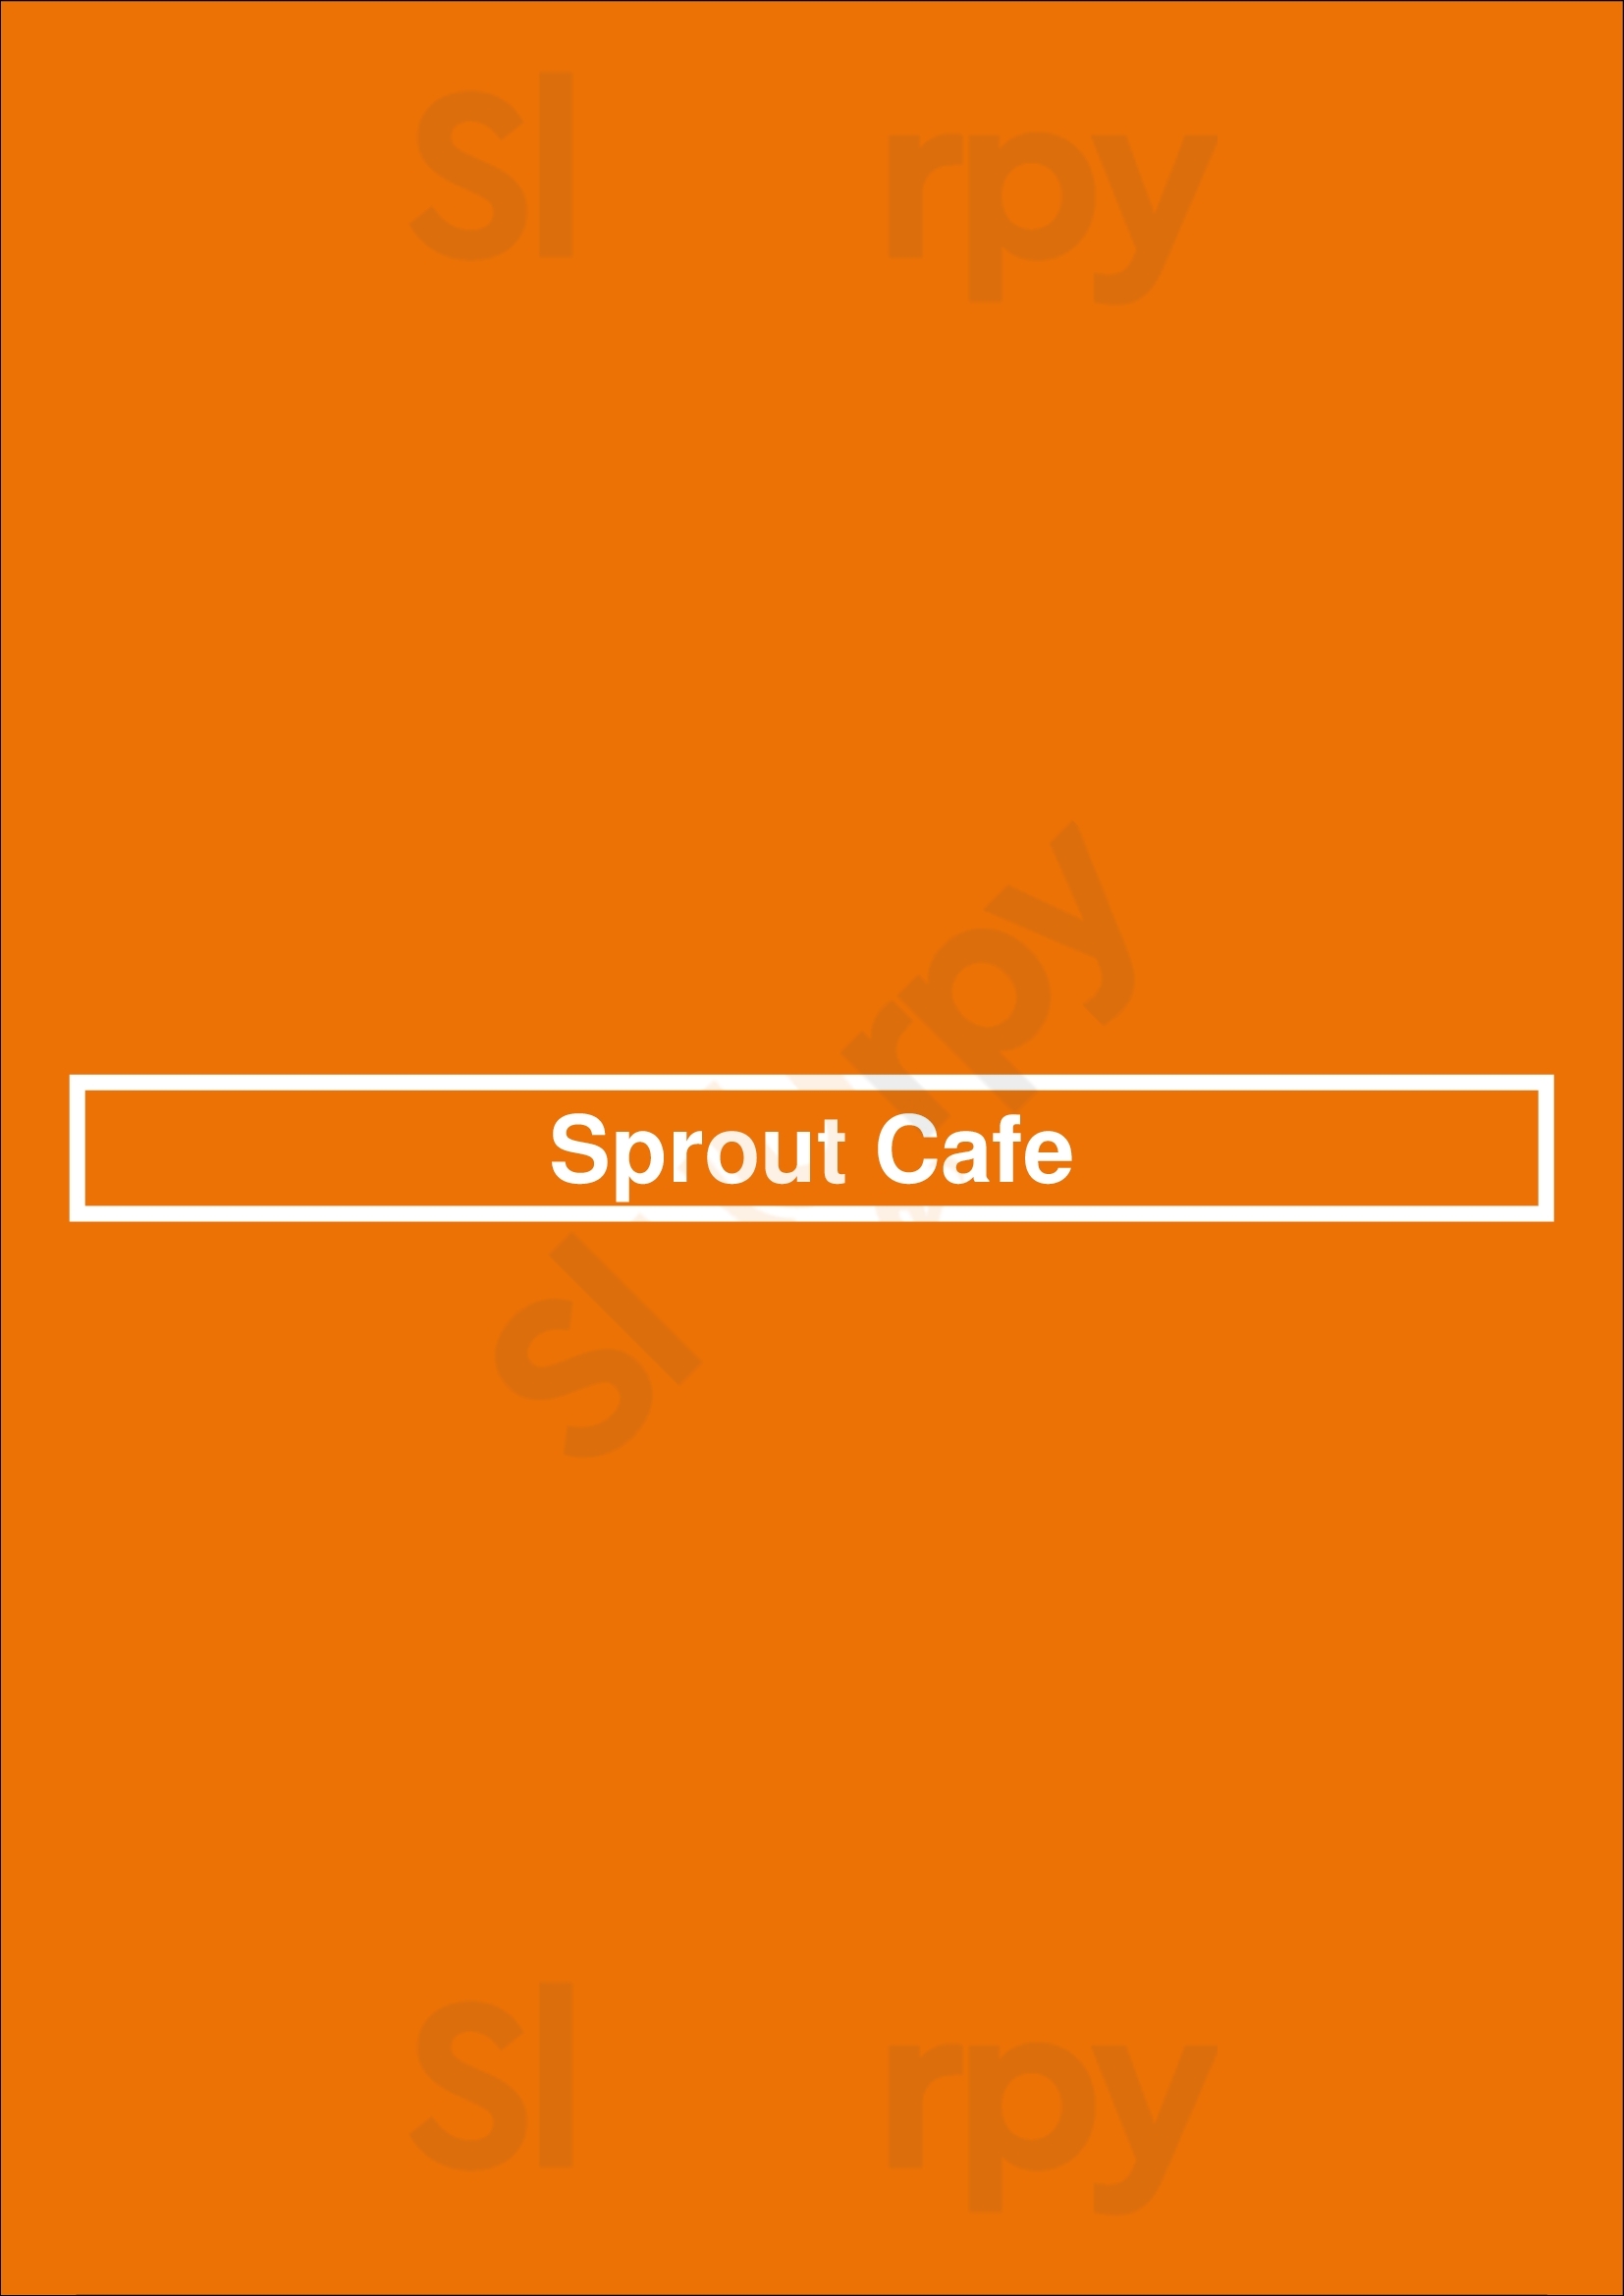 Sprout Cafe Palo Alto Menu - 1